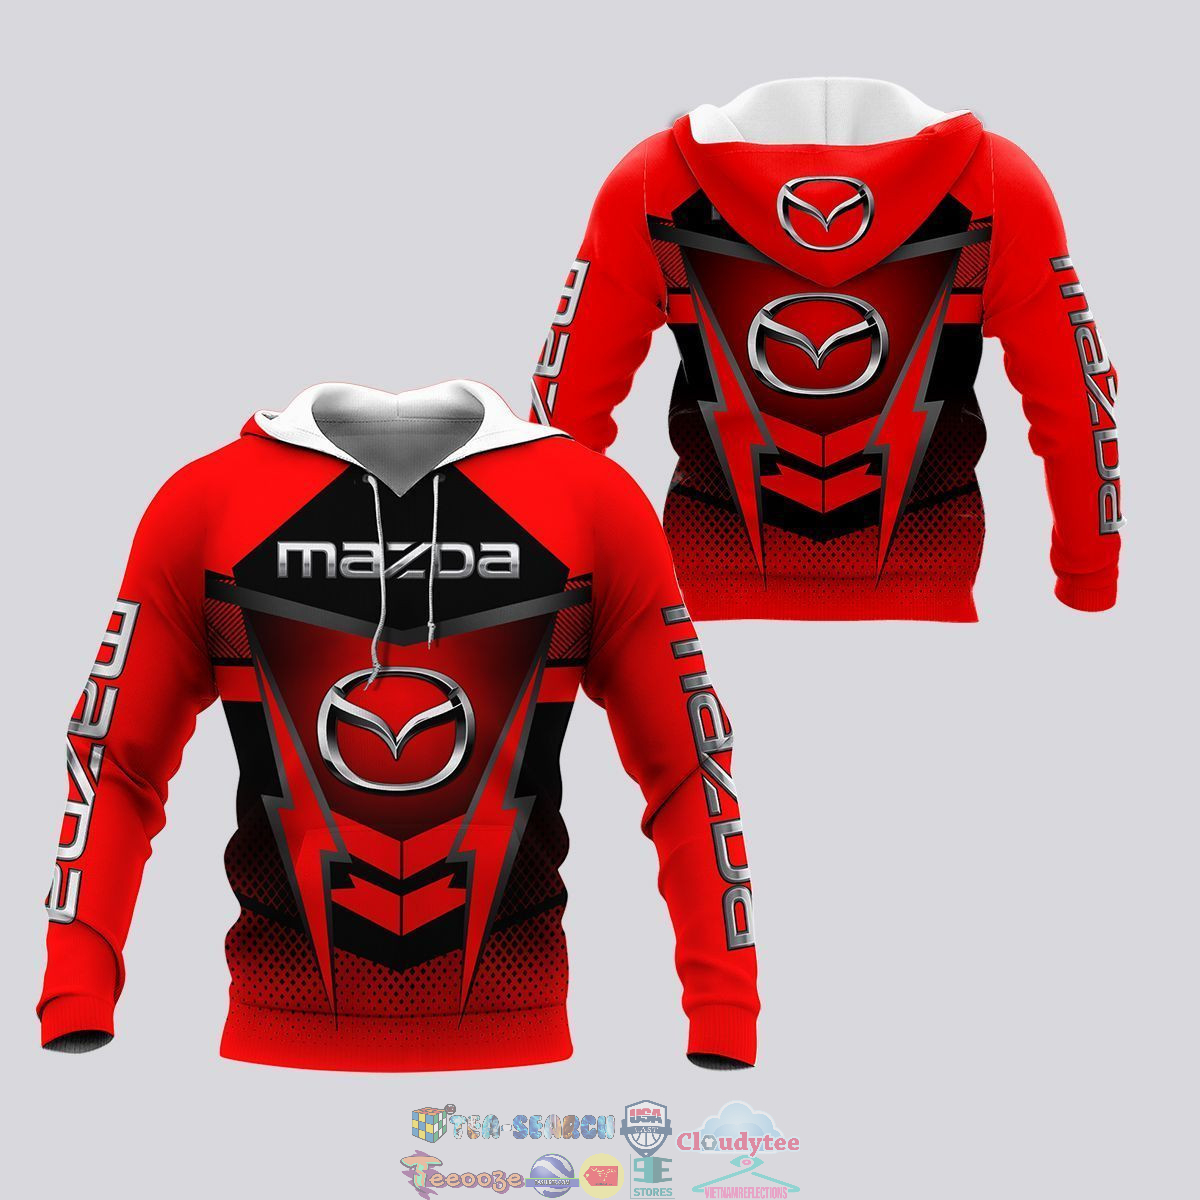 Mazda ver 7 3D hoodie and t-shirt – Saleoff